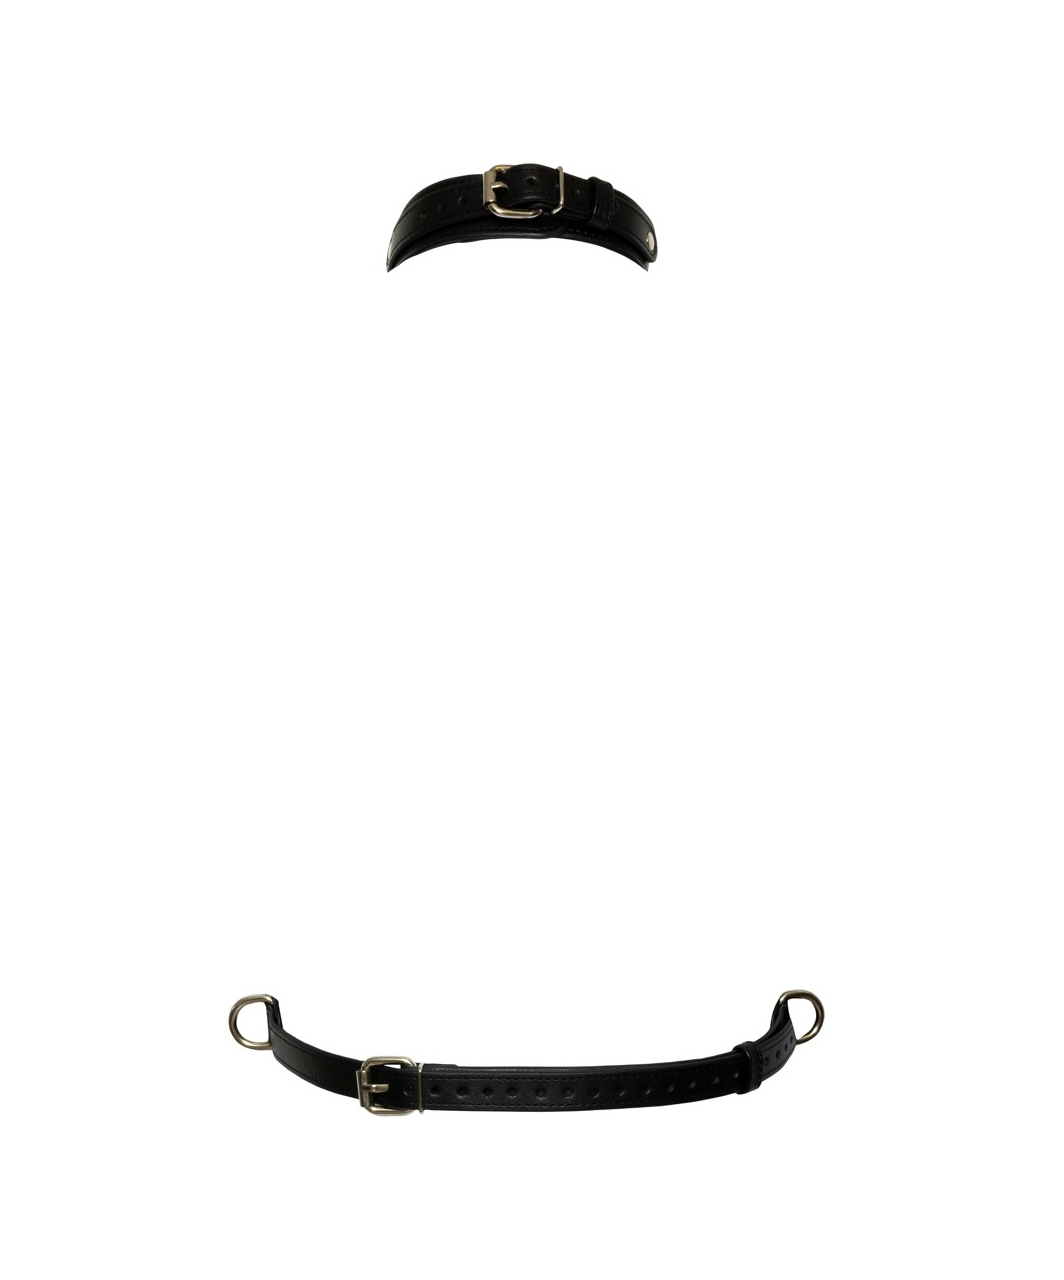 Bad Kitty leatherette bondage collar & harness